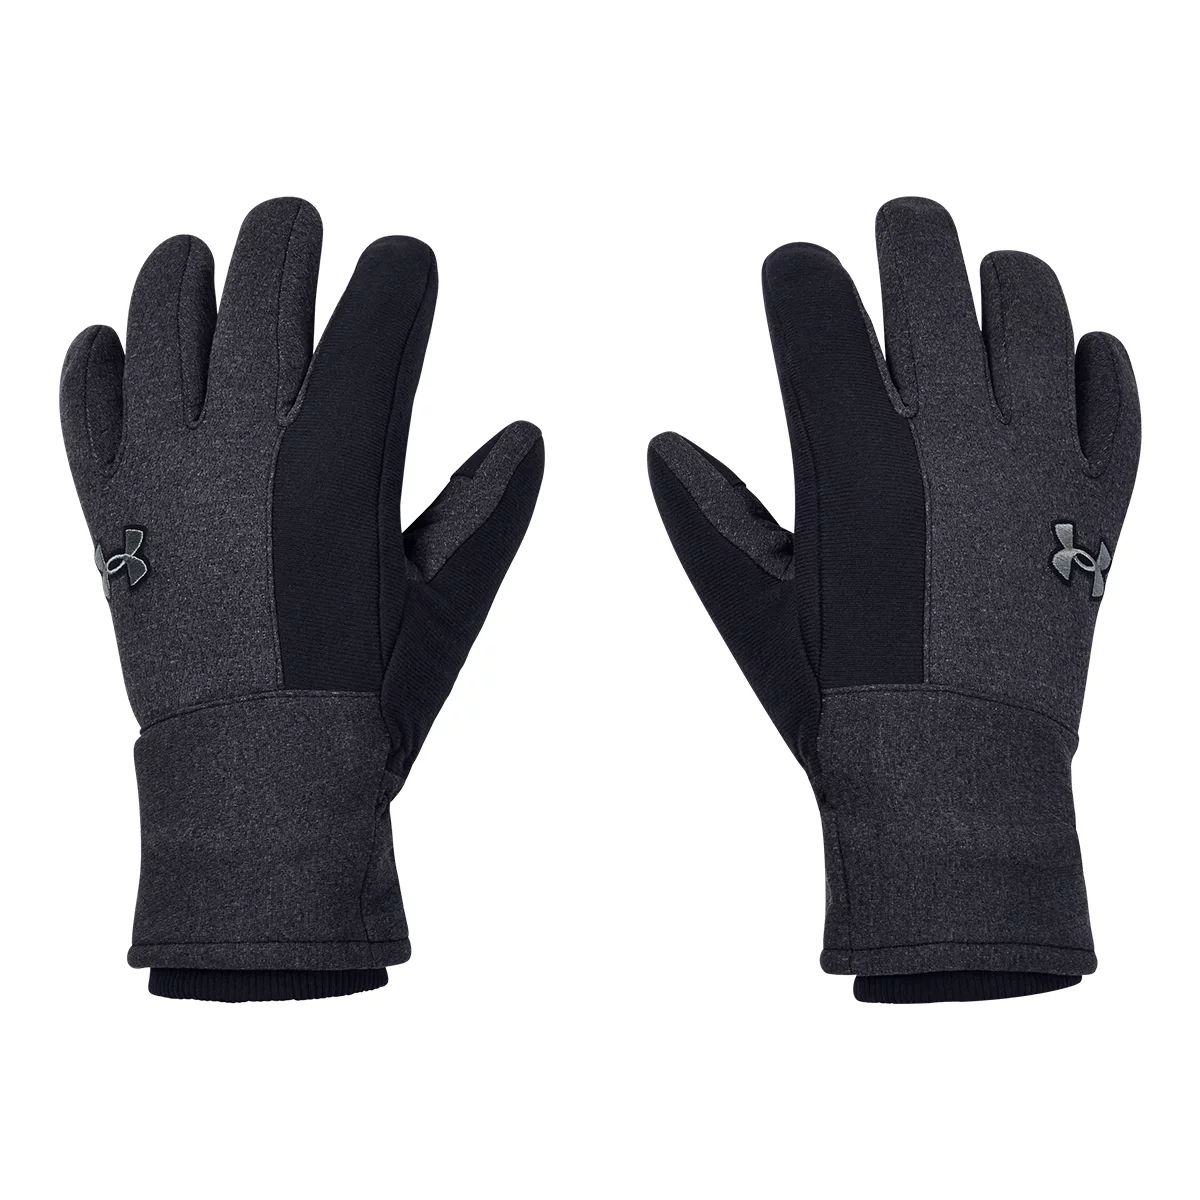 Under Armour Men's ColdGear® Infrared Storm Gloves